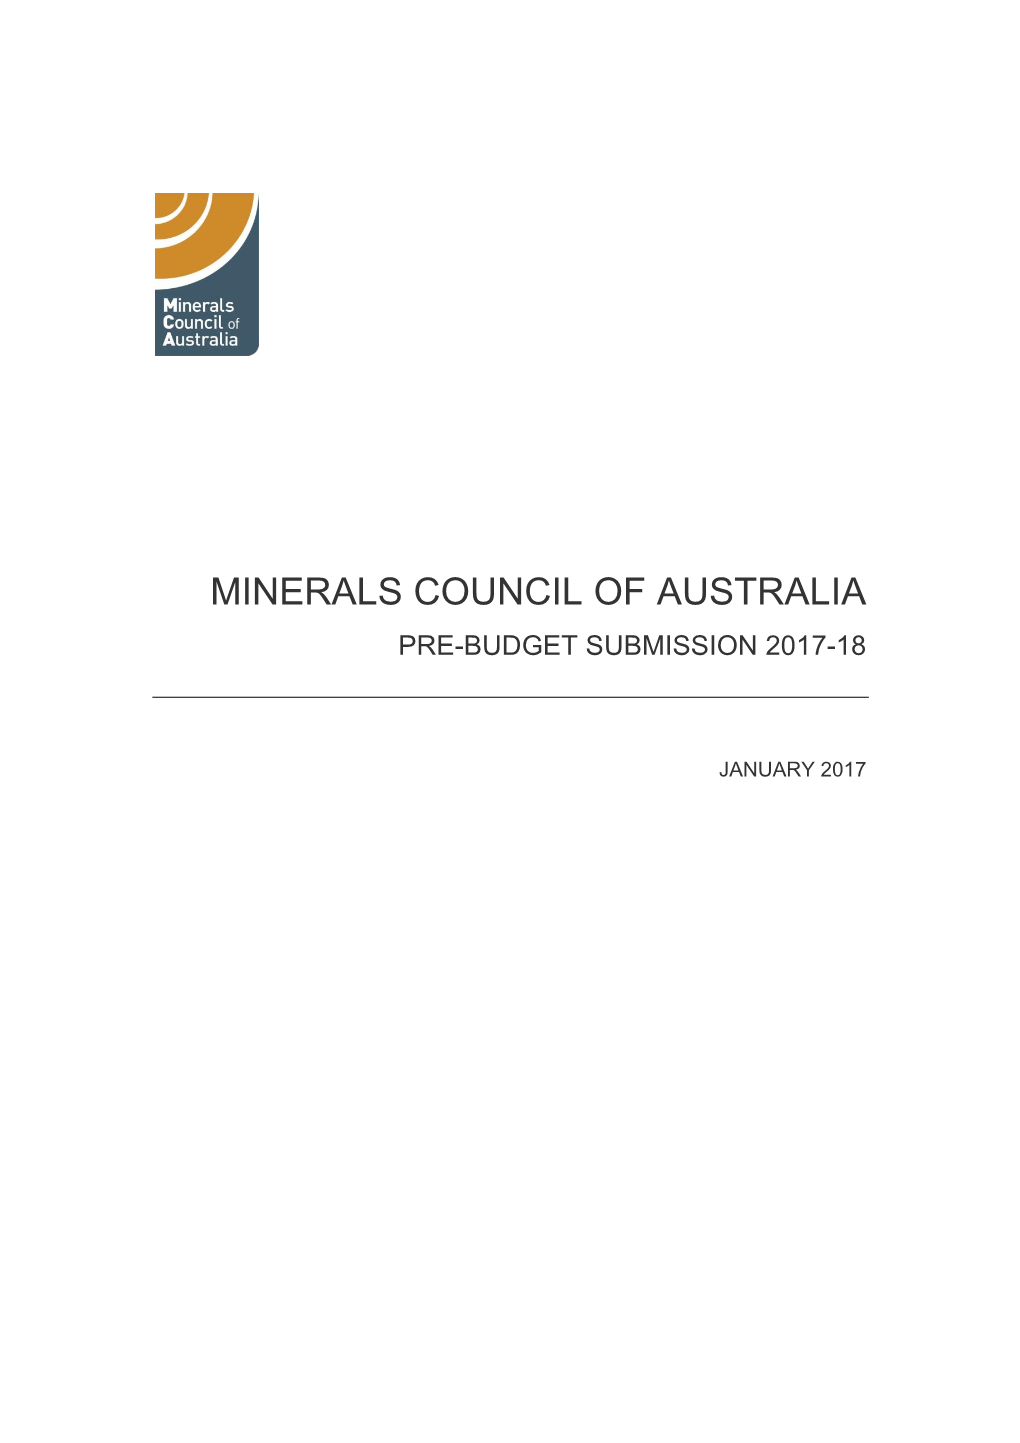 Minerals Council of Australia Pre-Budget Submission 2017-18